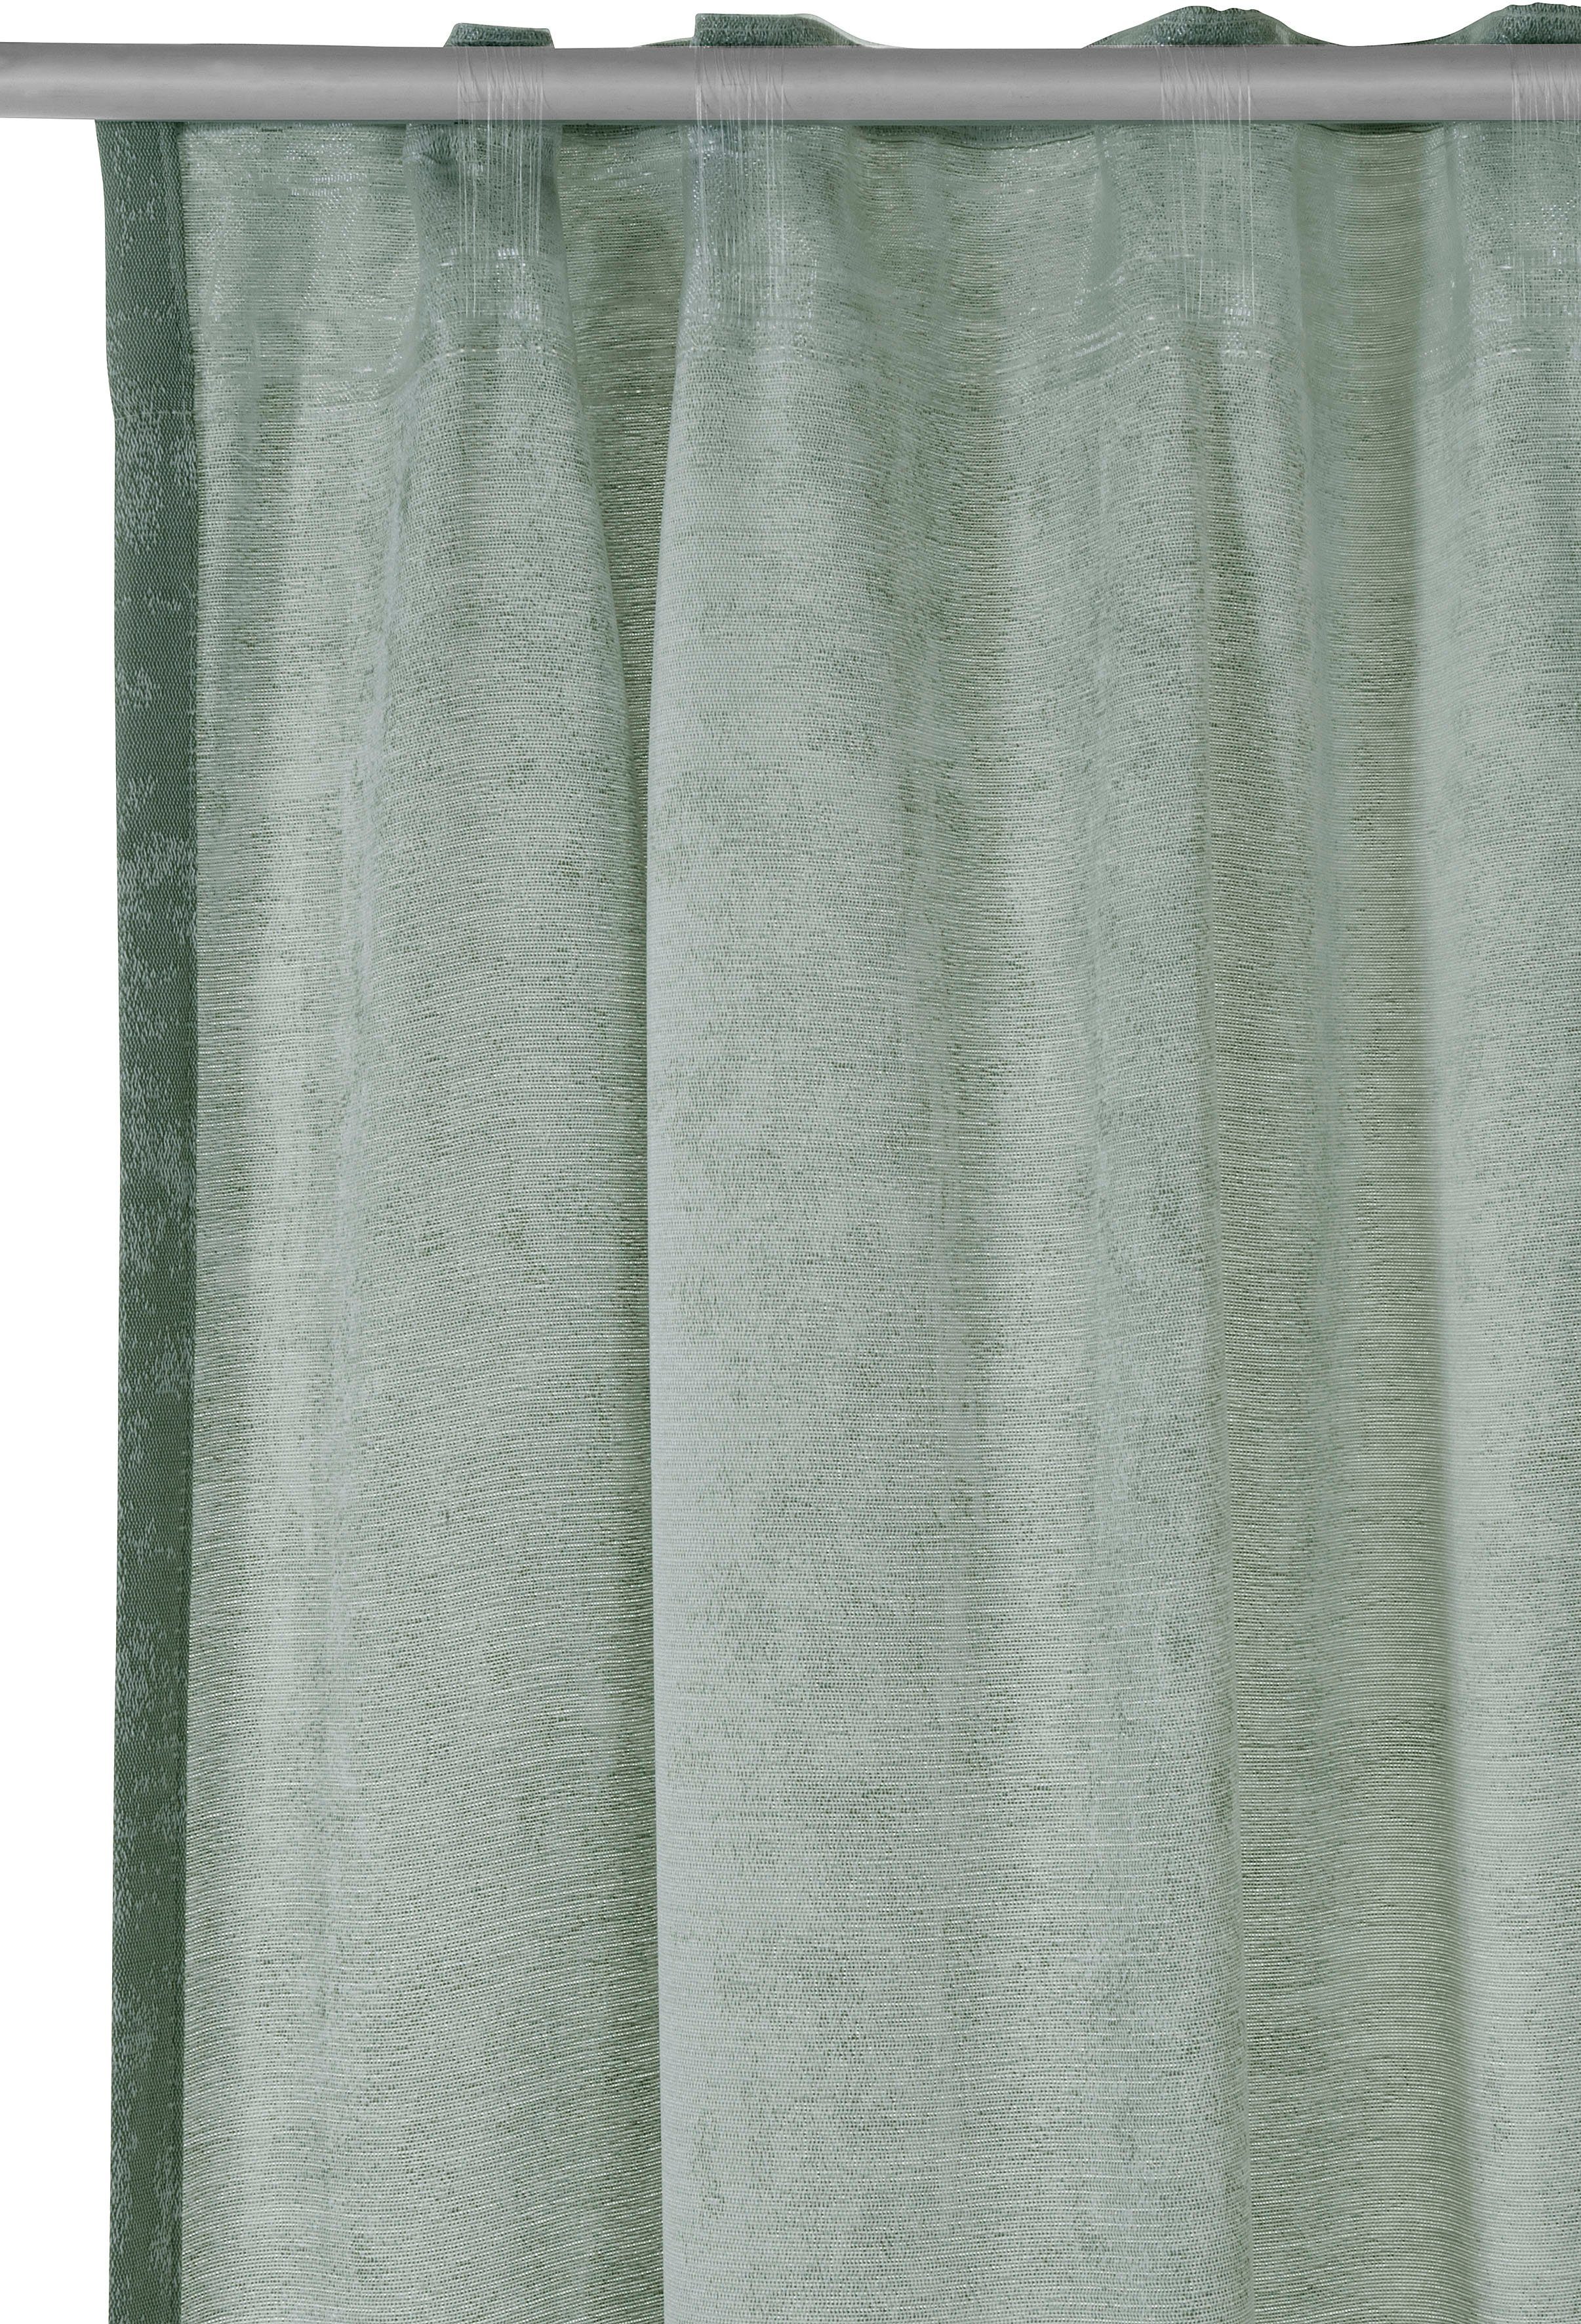 Vorhang LESKA, LeGer Home by blickdicht, blickdicht, grün verschiedene Größen (1 Gercke, Jacquard, Multifunktionsband monochrom, St), gewebt, glatt, Lena